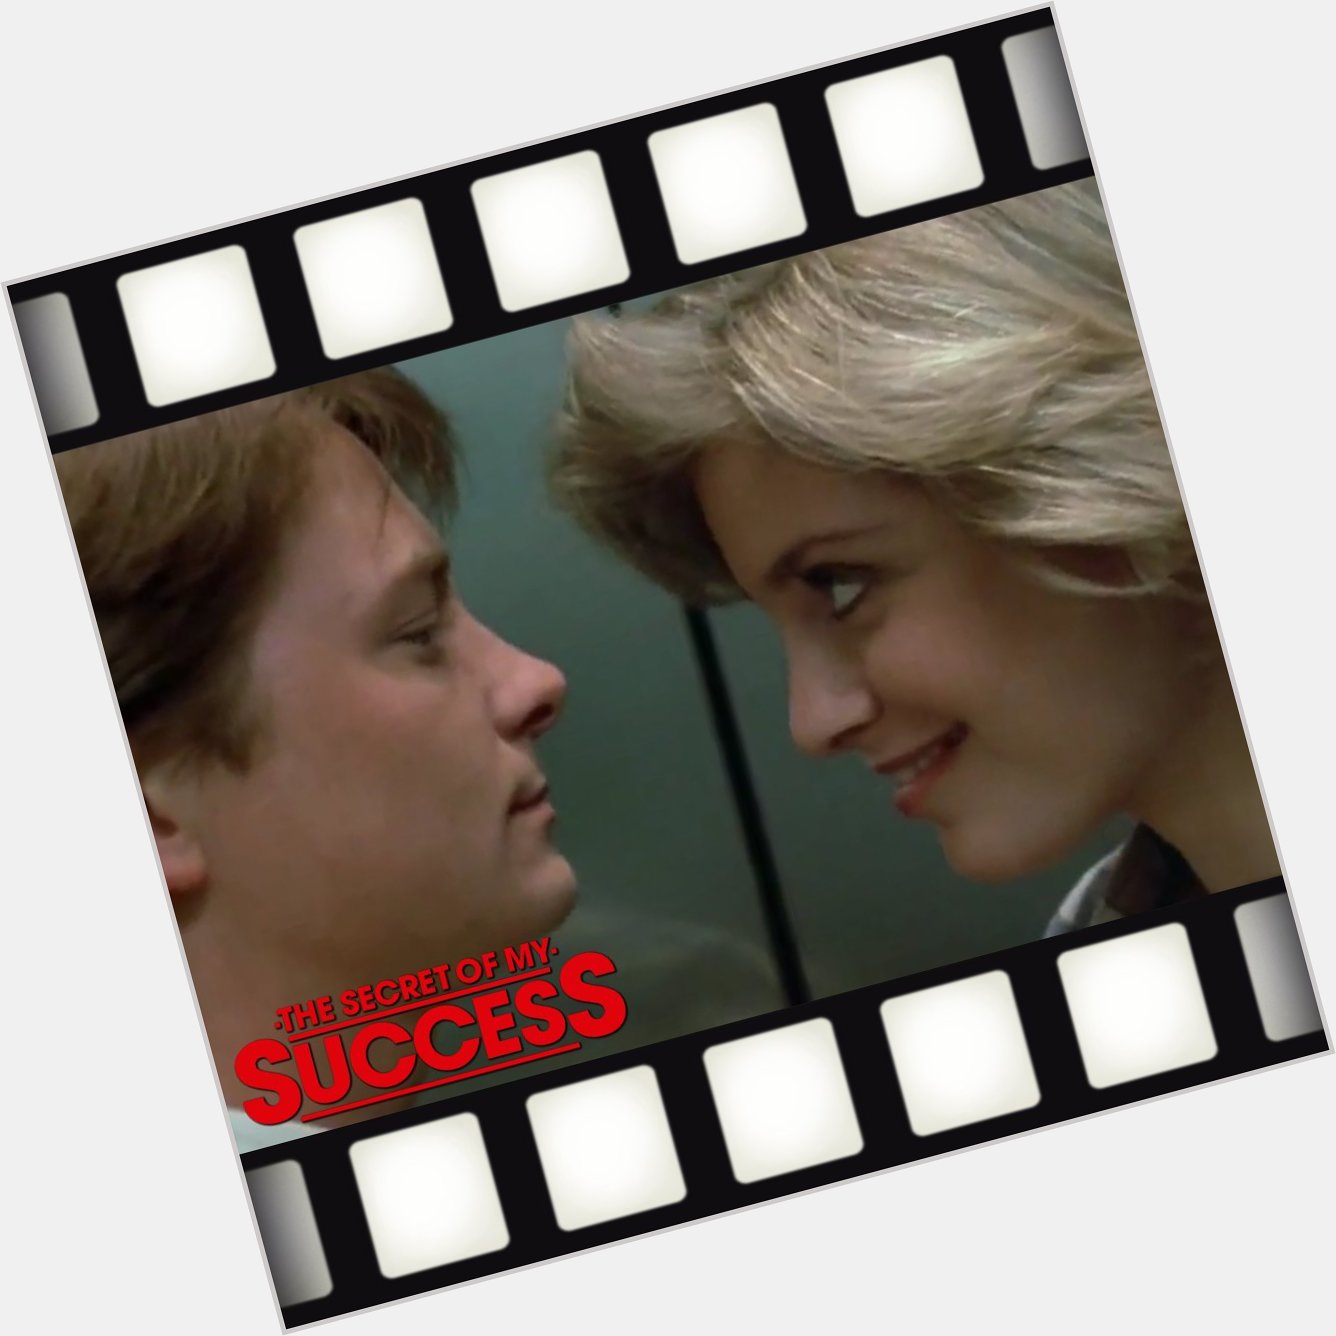 The Secret of My Success  (1987)
Happy Birthday, Helen Slater! 